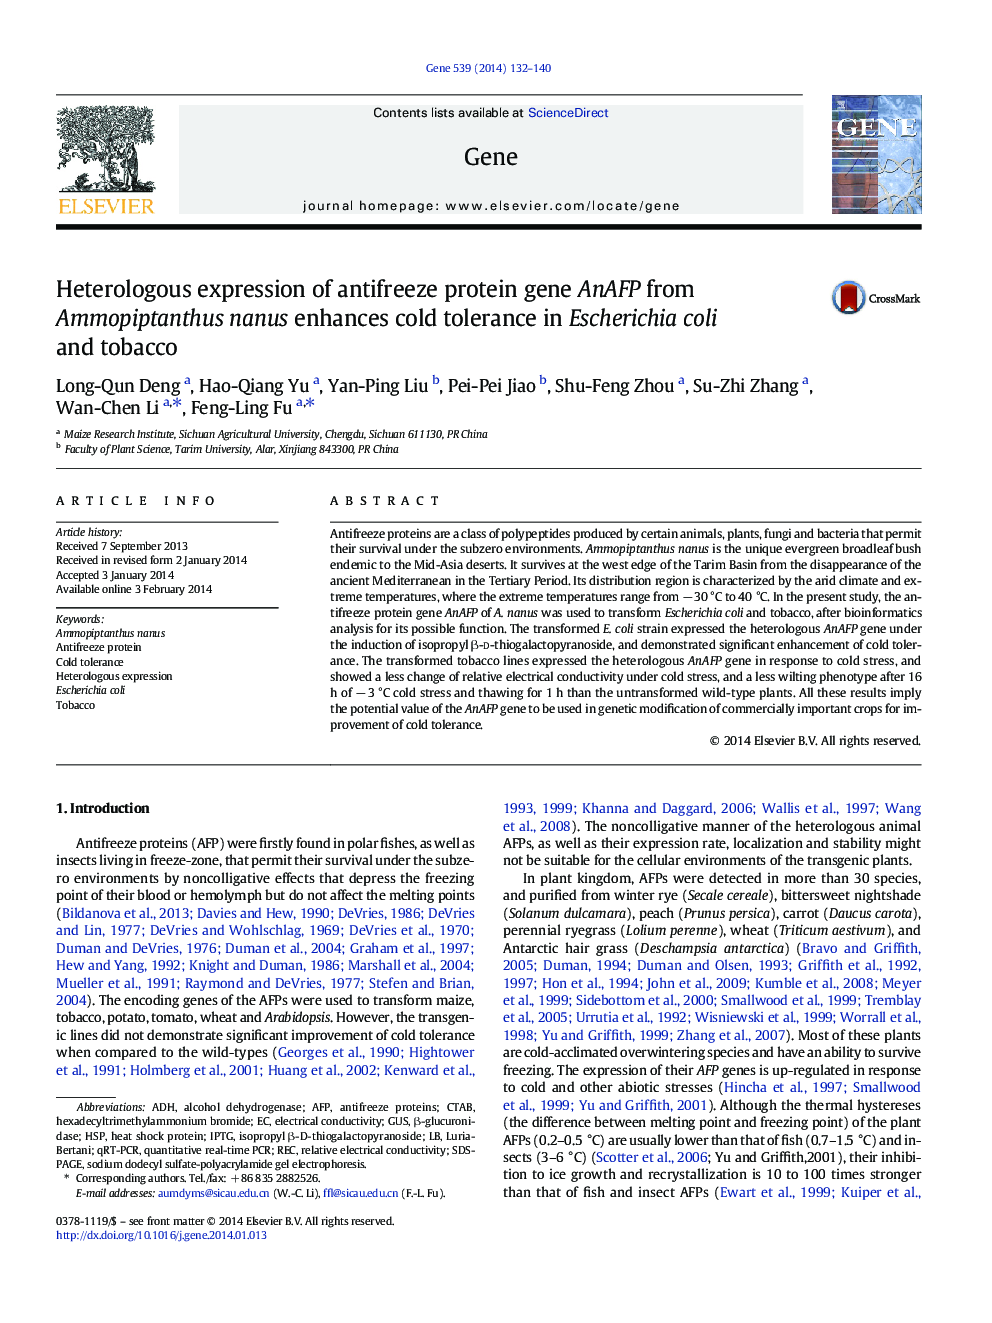 Heterologous expression of antifreeze protein gene AnAFP from Ammopiptanthus nanus enhances cold tolerance in Escherichia coli and tobacco